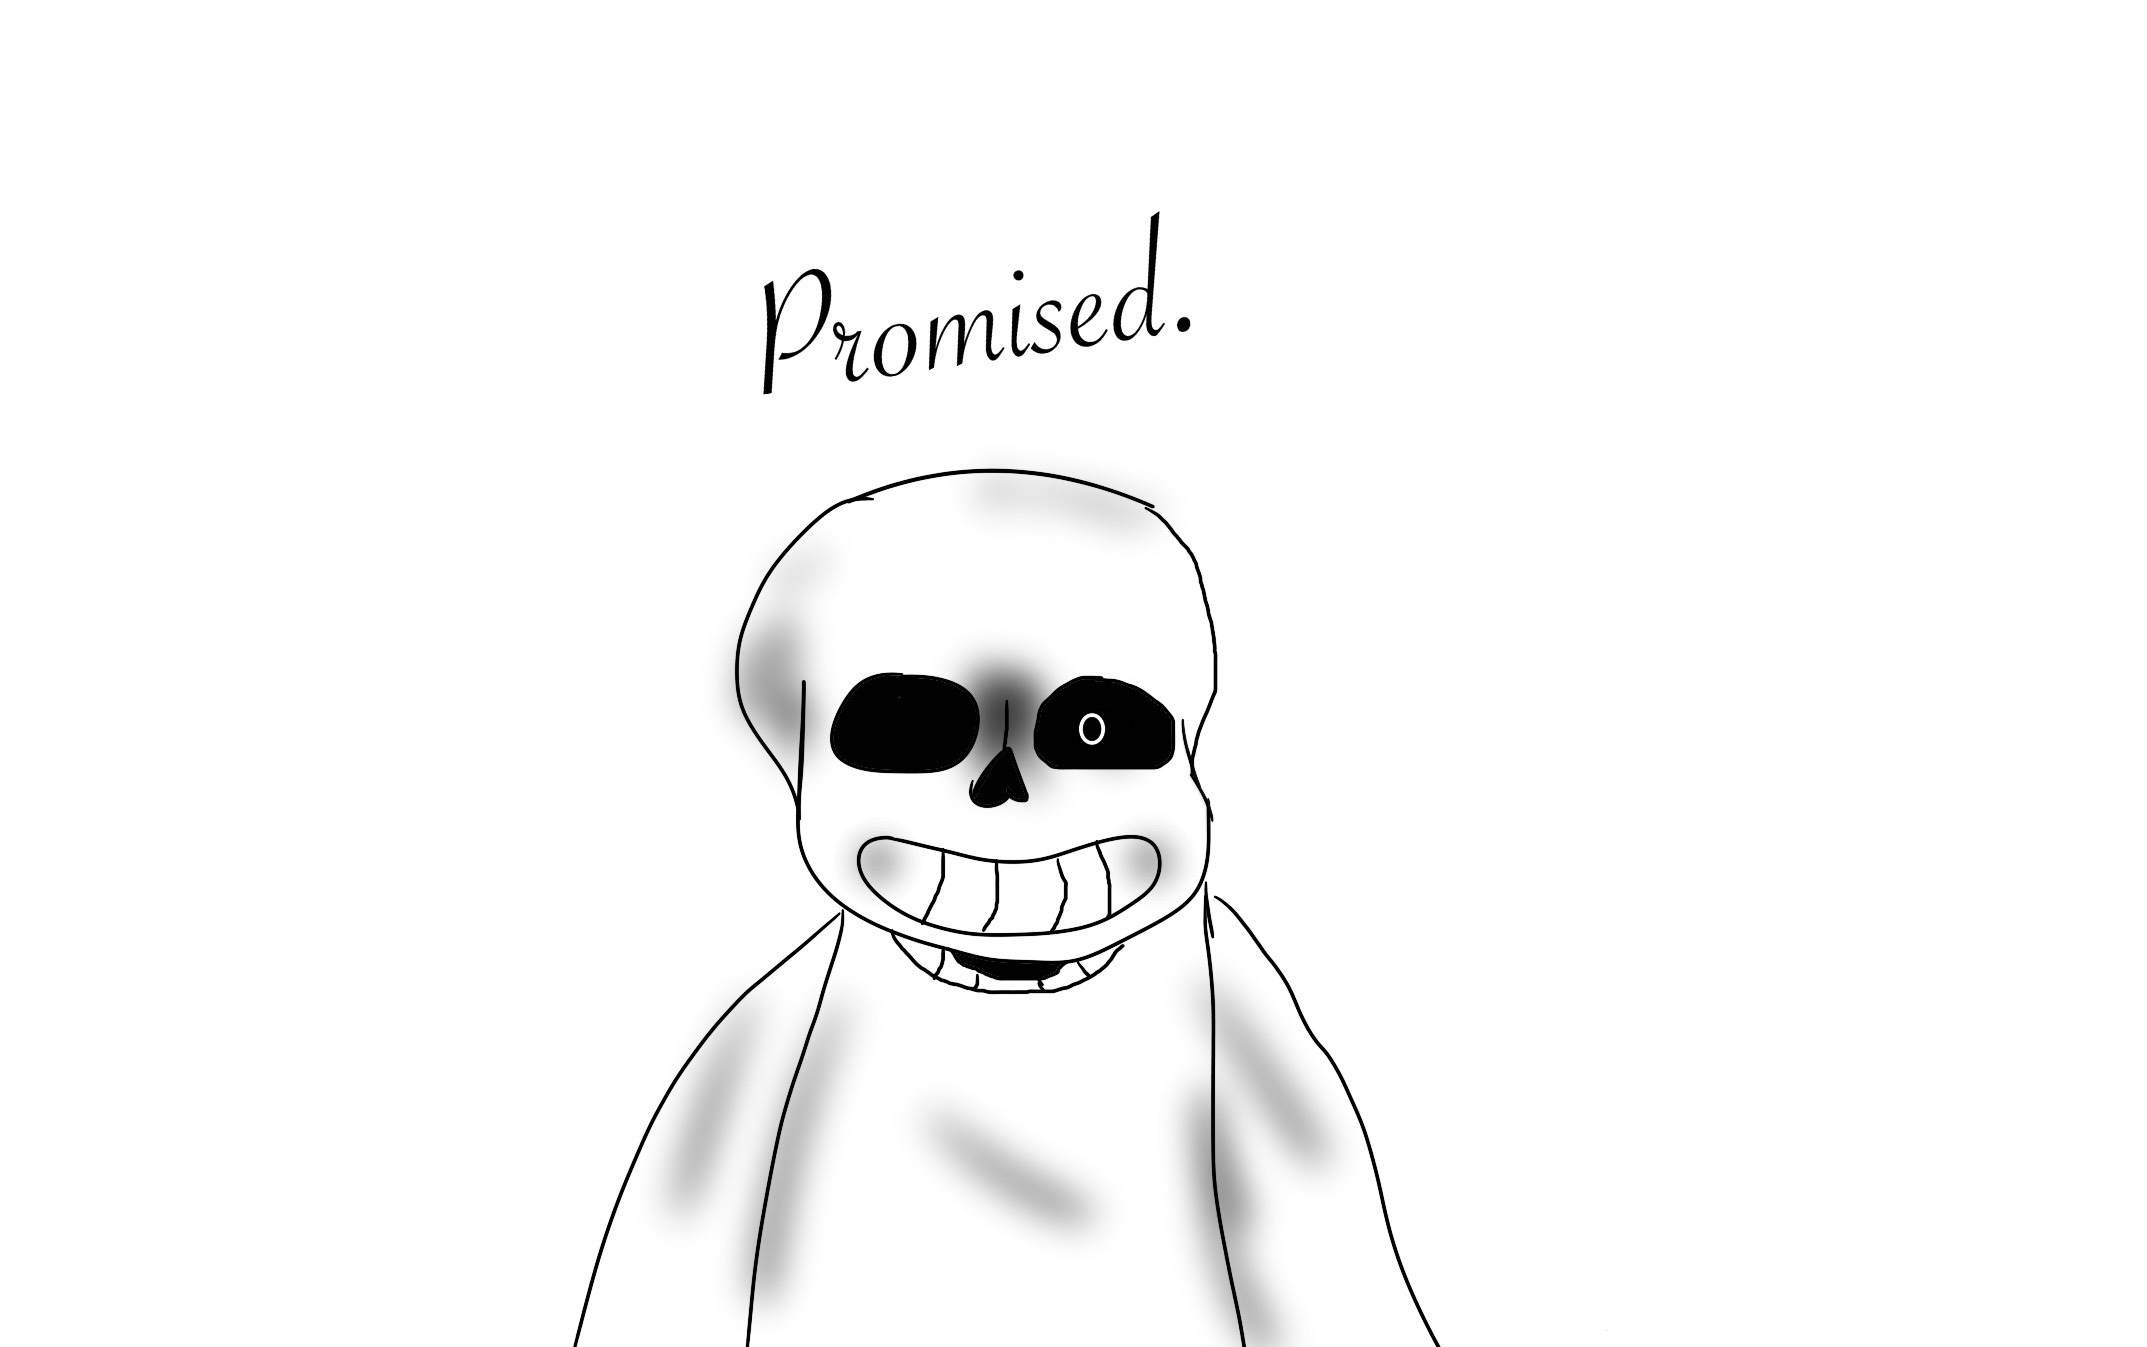 Promised Sans (idk au) by TreloPixel on DeviantArt